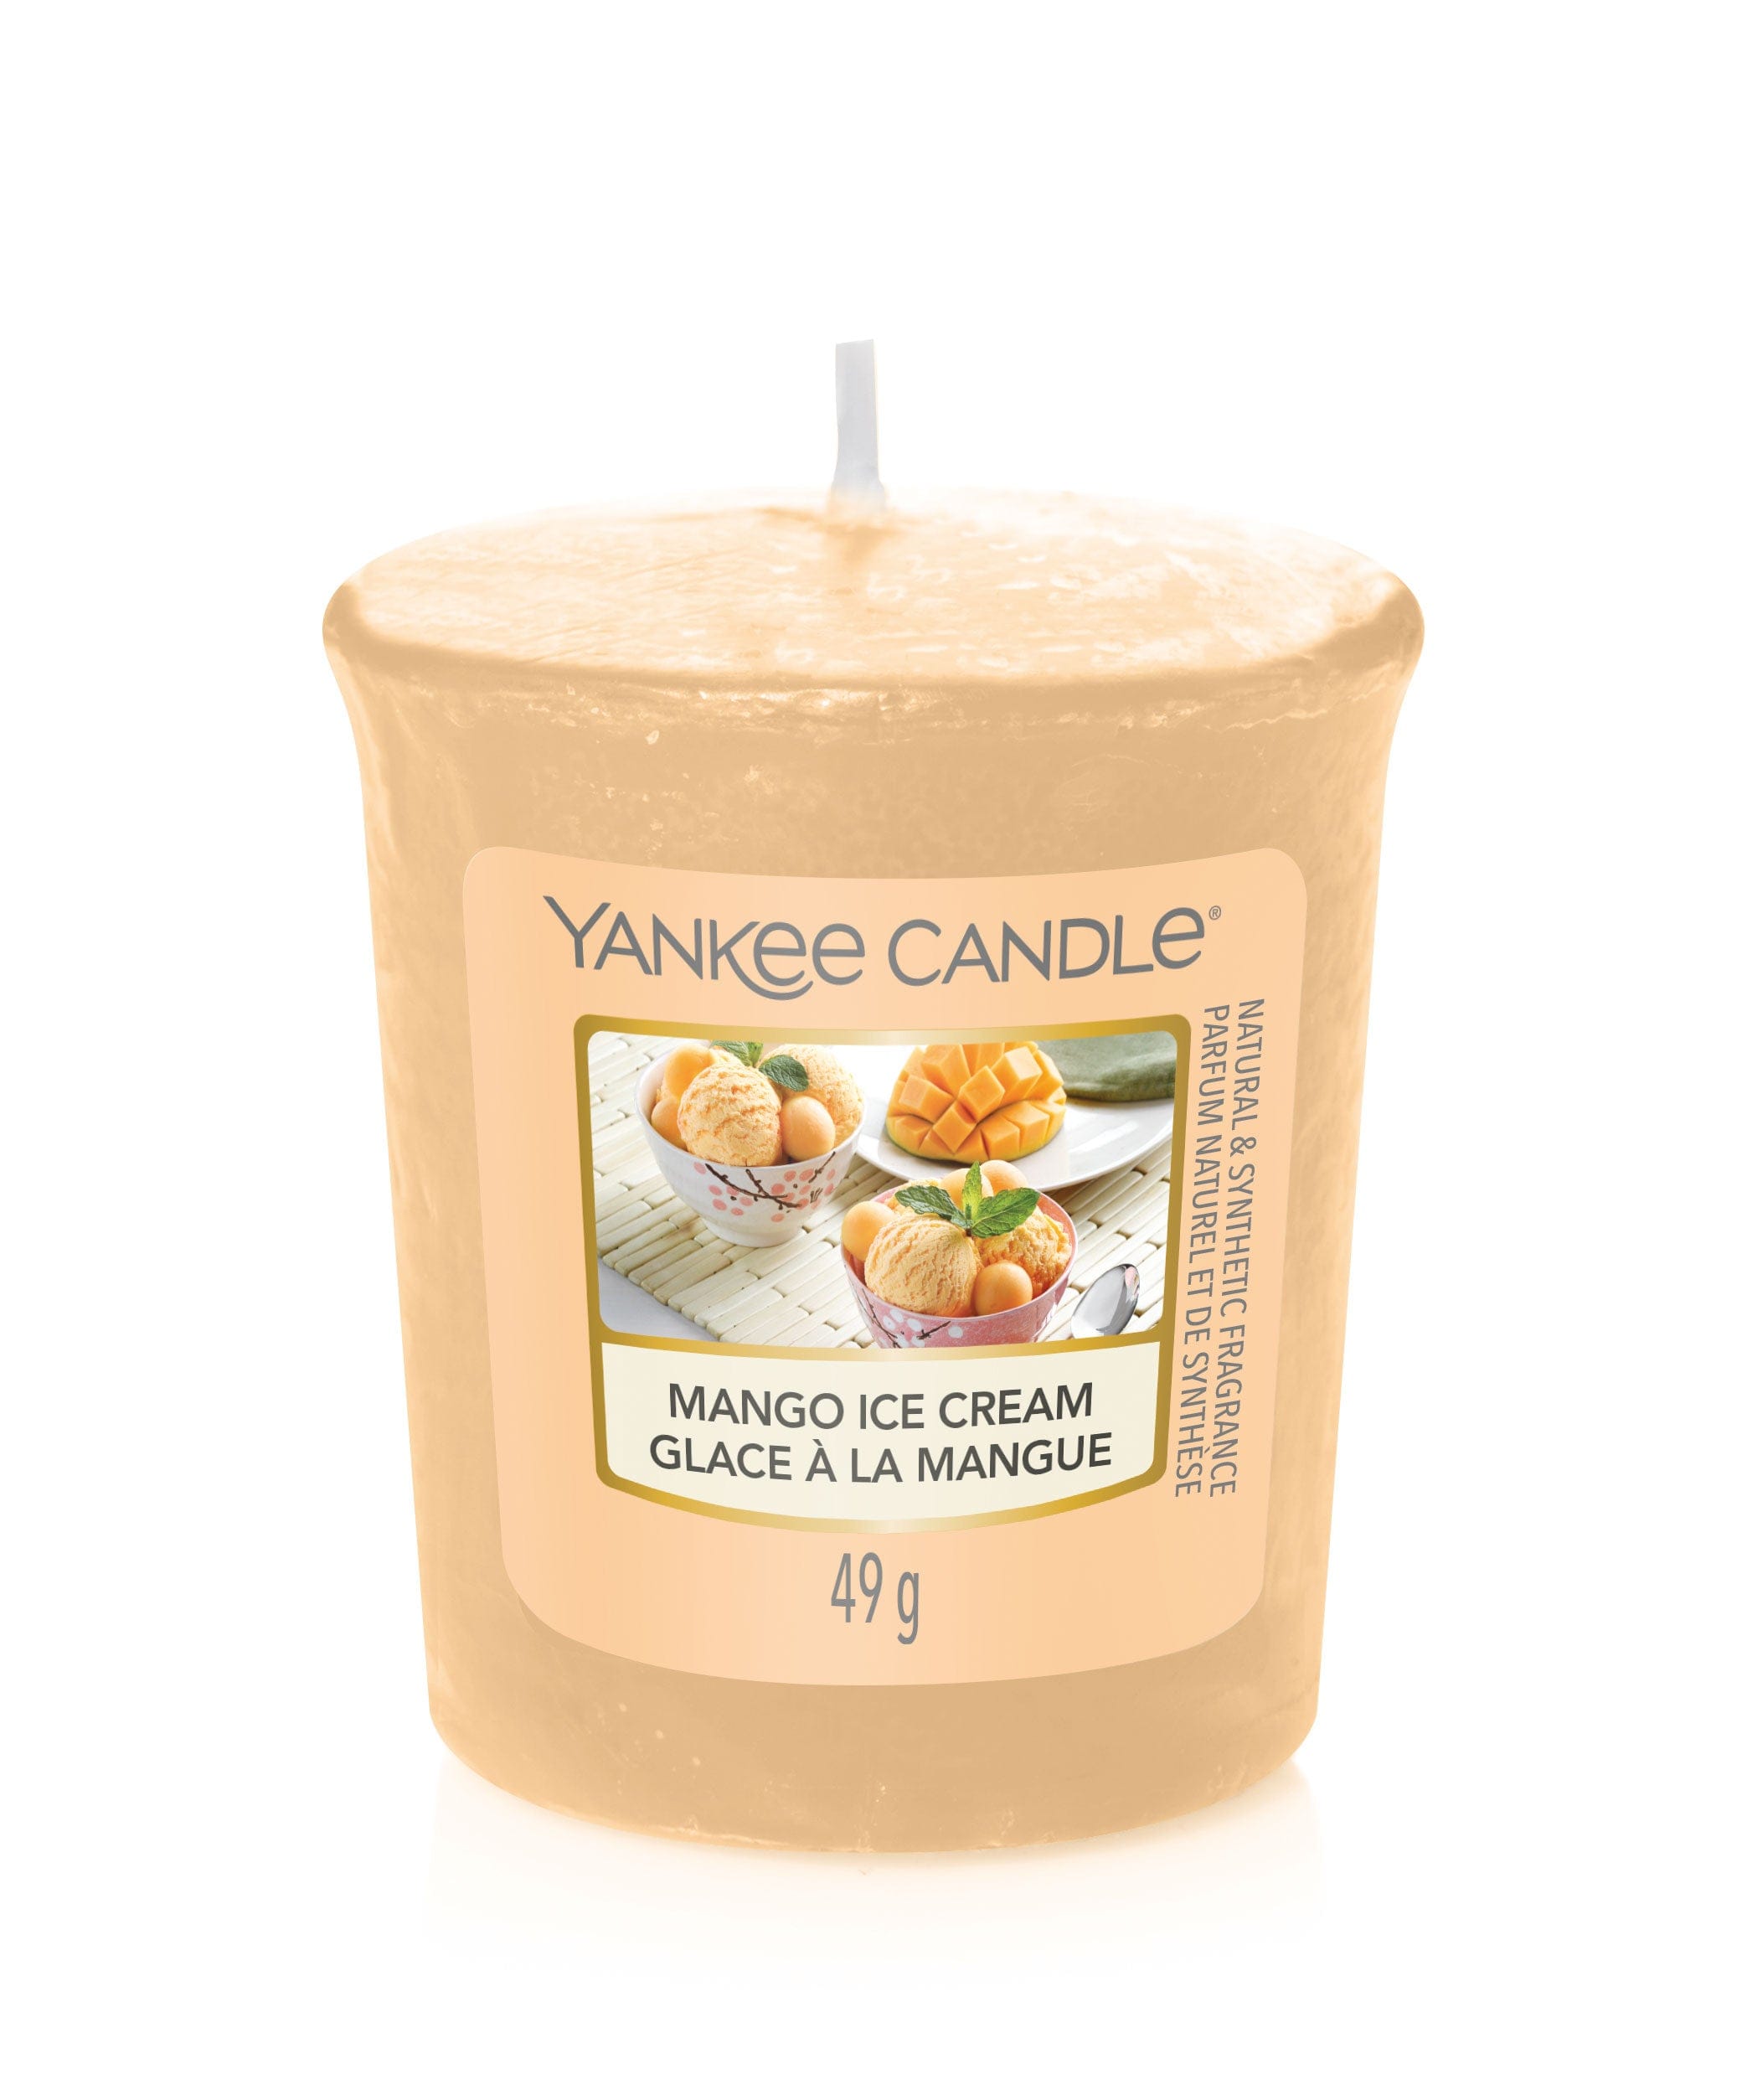 Yankee Candle Votive Candle Yankee Candle Votive Sampler - Mango Ice Cream